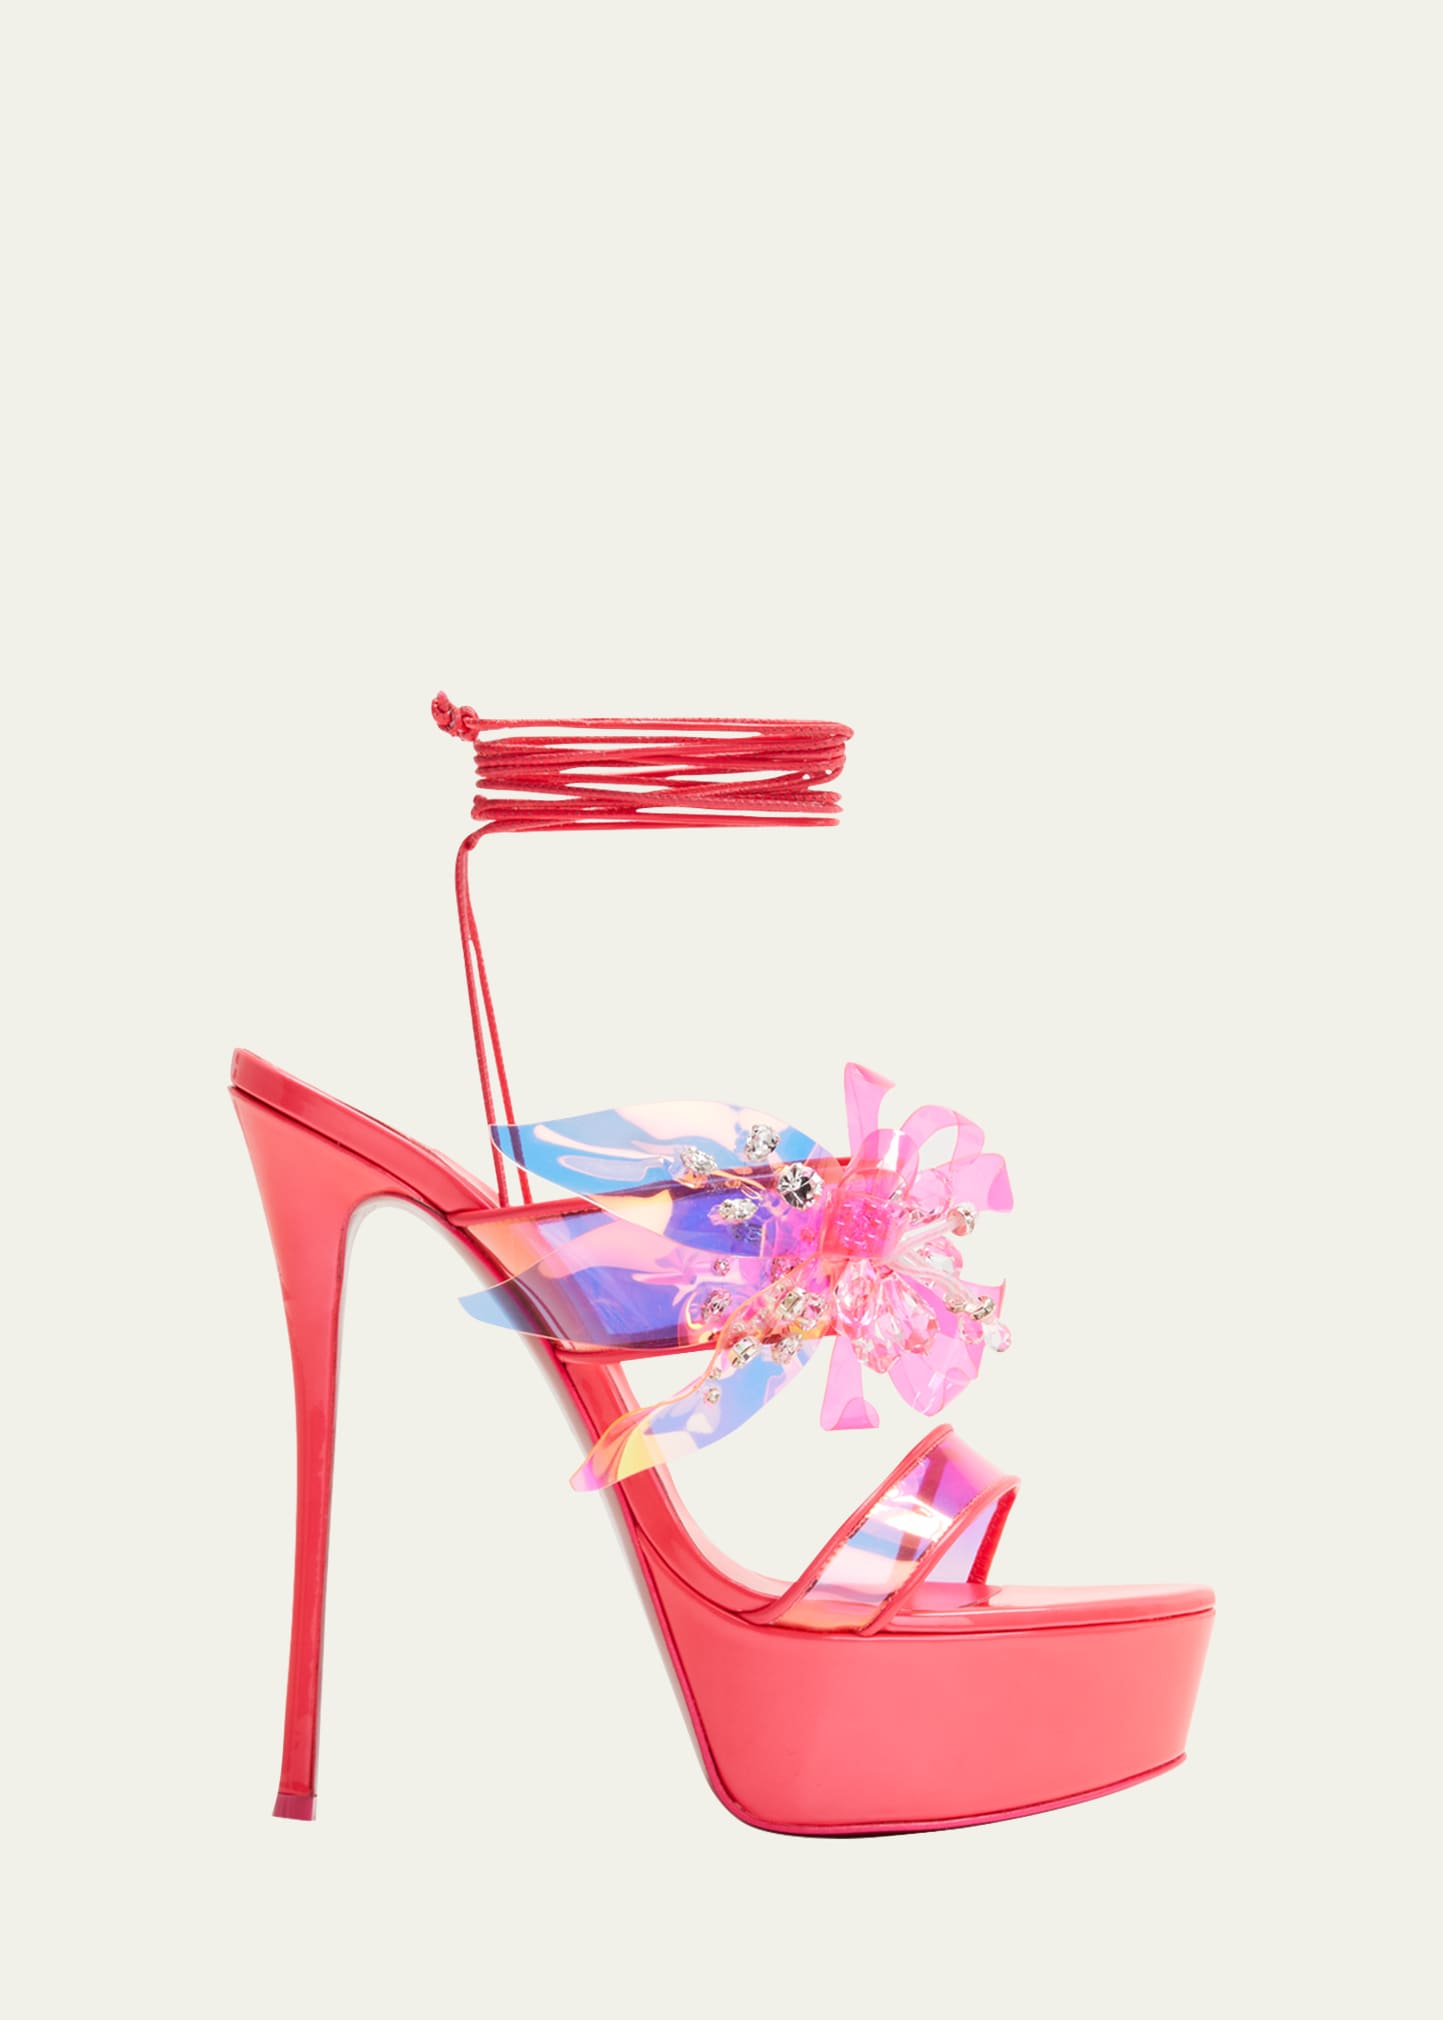 Christian Louboutin Alyah Iridescent Flower Red Sole Sandals